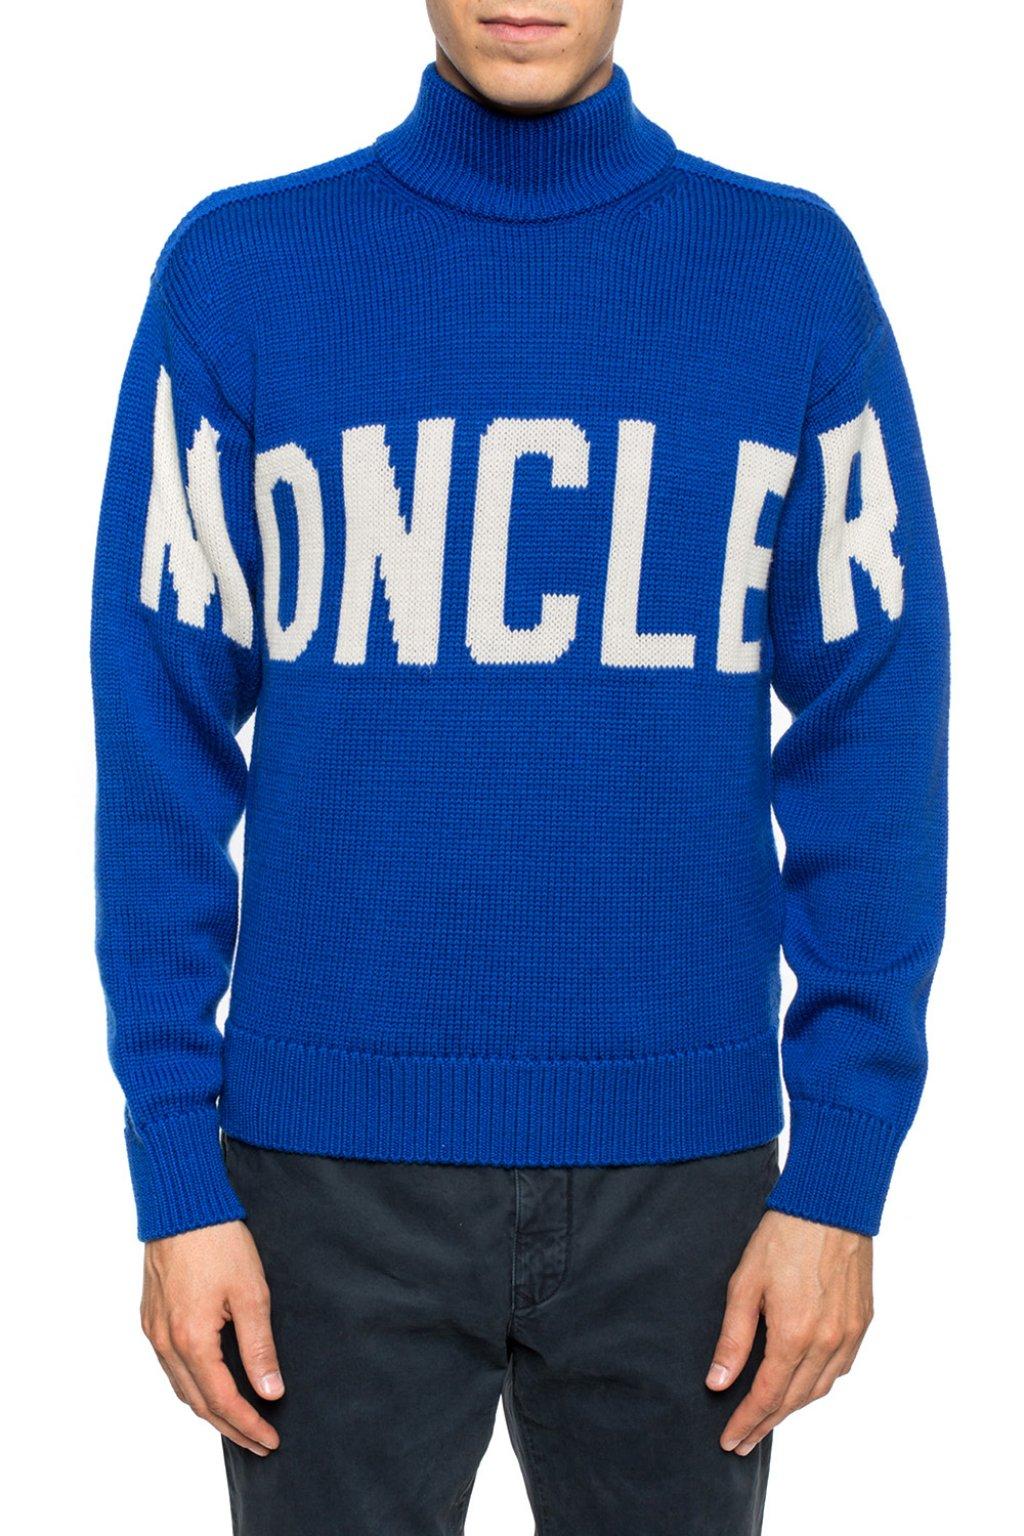 Moncler Branded Wool Turtleneck Sweater in Blue for Men - Lyst